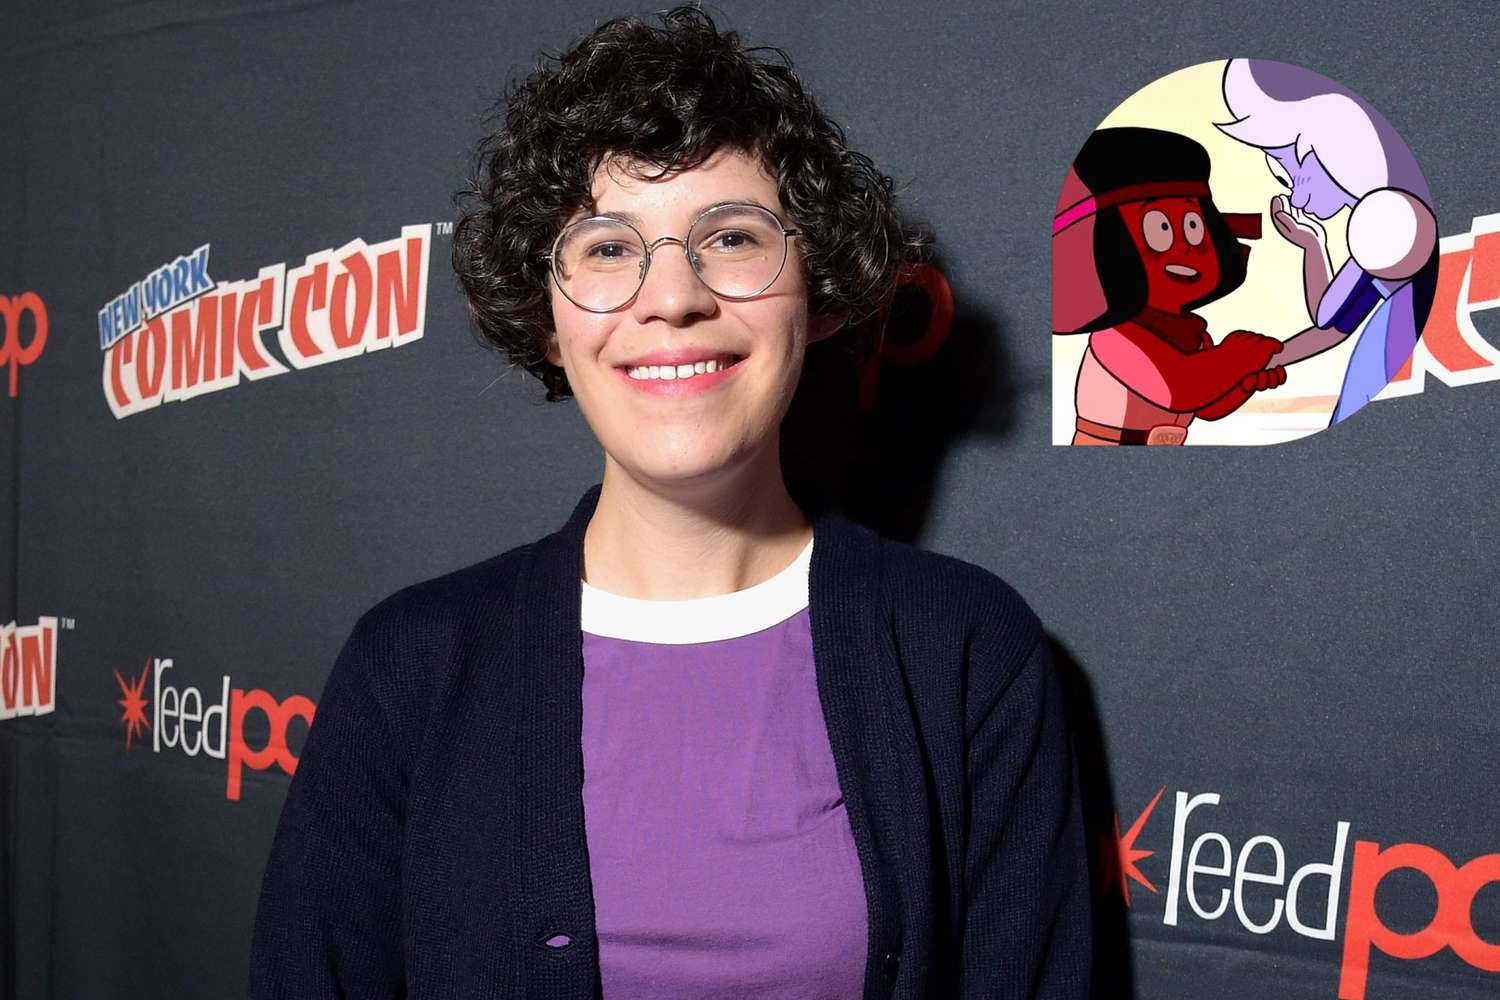 Steven Universe's Rebecca Sugar on LGBTQ visibility in cartoons 